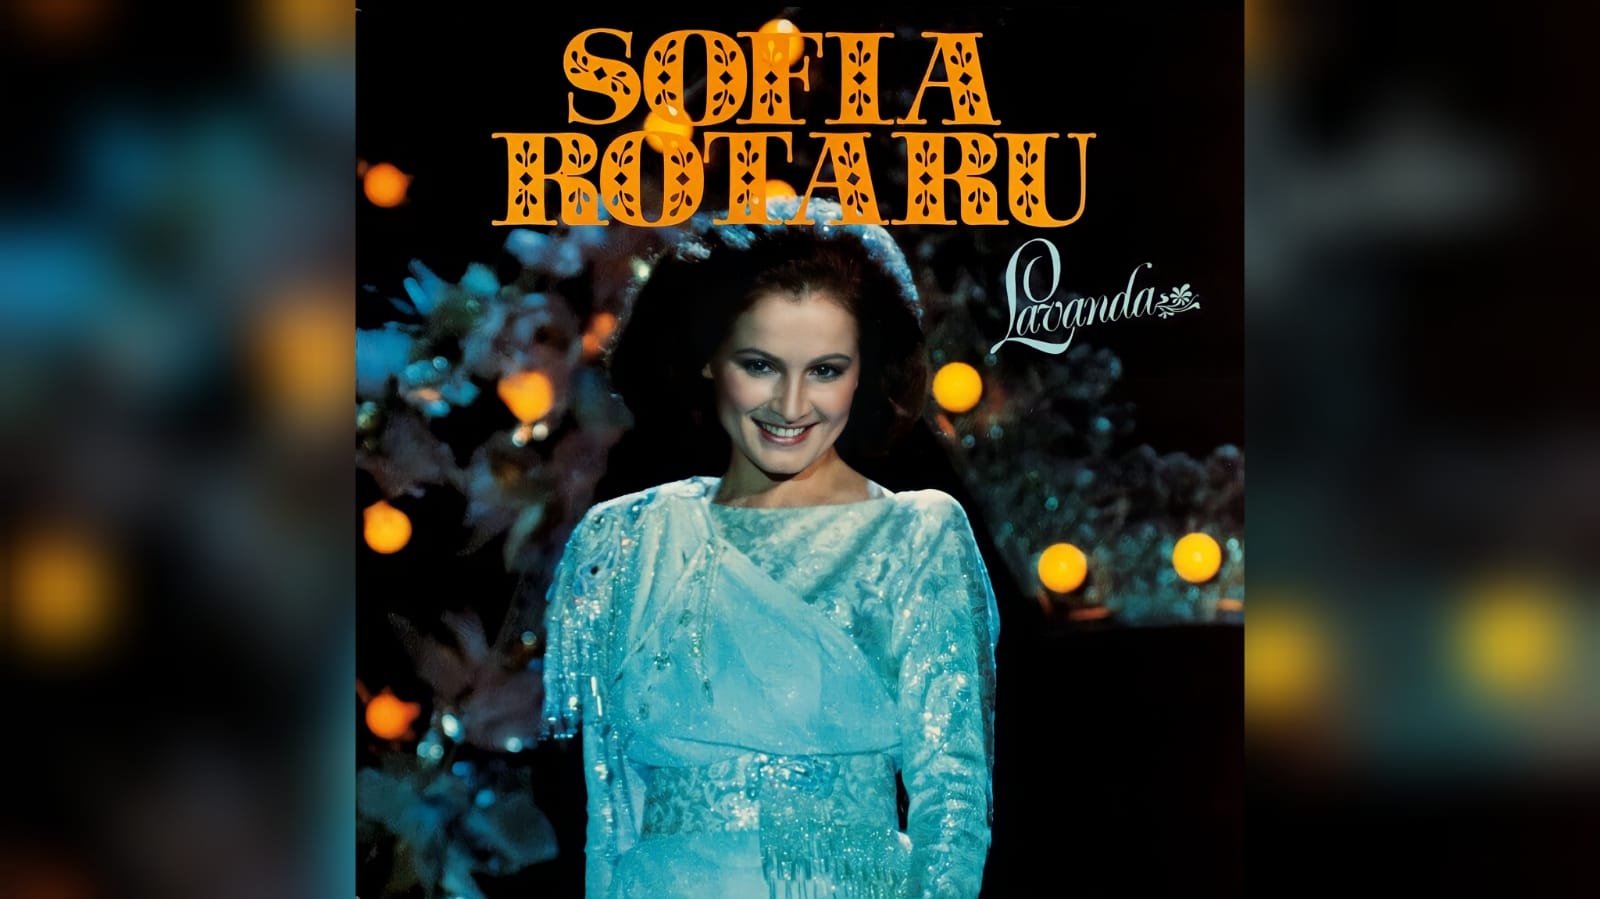 Sofia Rotaru - Lavanda
СD / Album
1987 Finnlevy
Digitization from vinyl